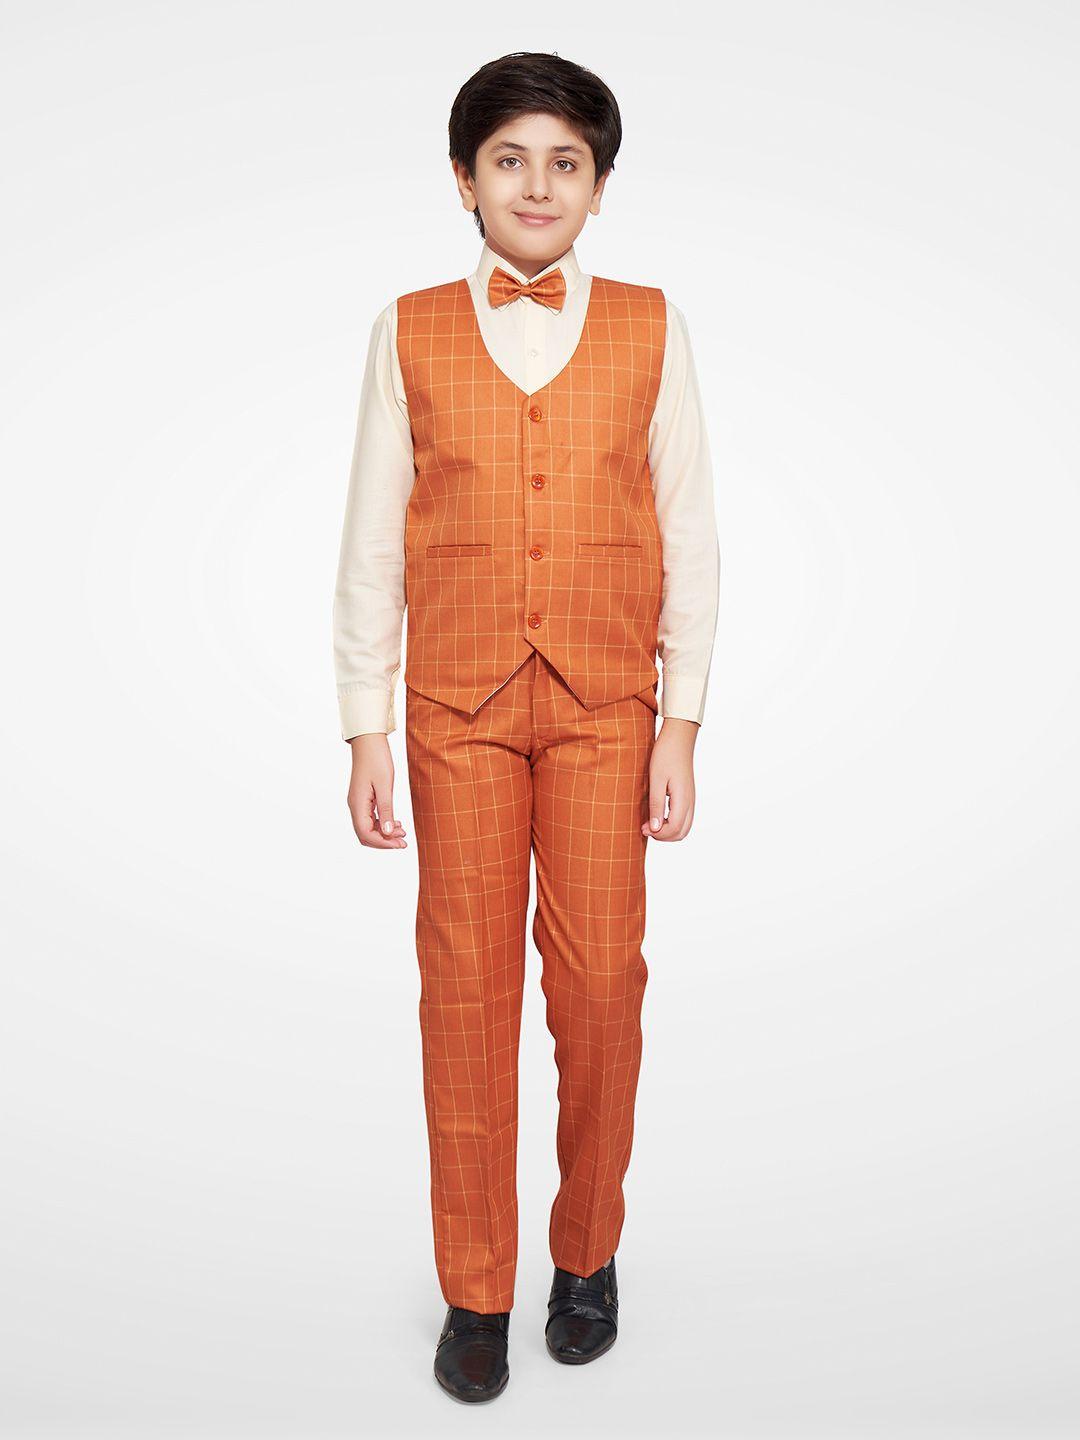 jeetethnics boys orange & cream-coloured checked shirt with trousers